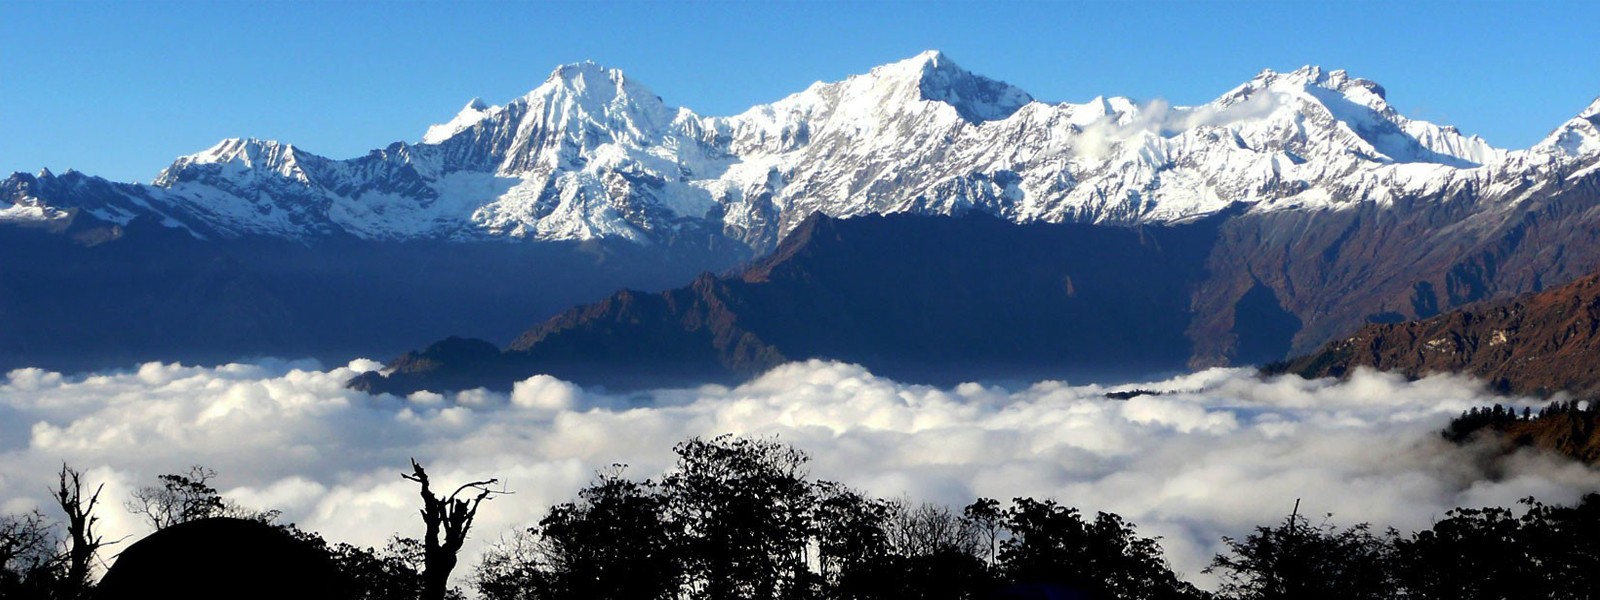 Rupina-La Pass with Ganesh Himal Trek